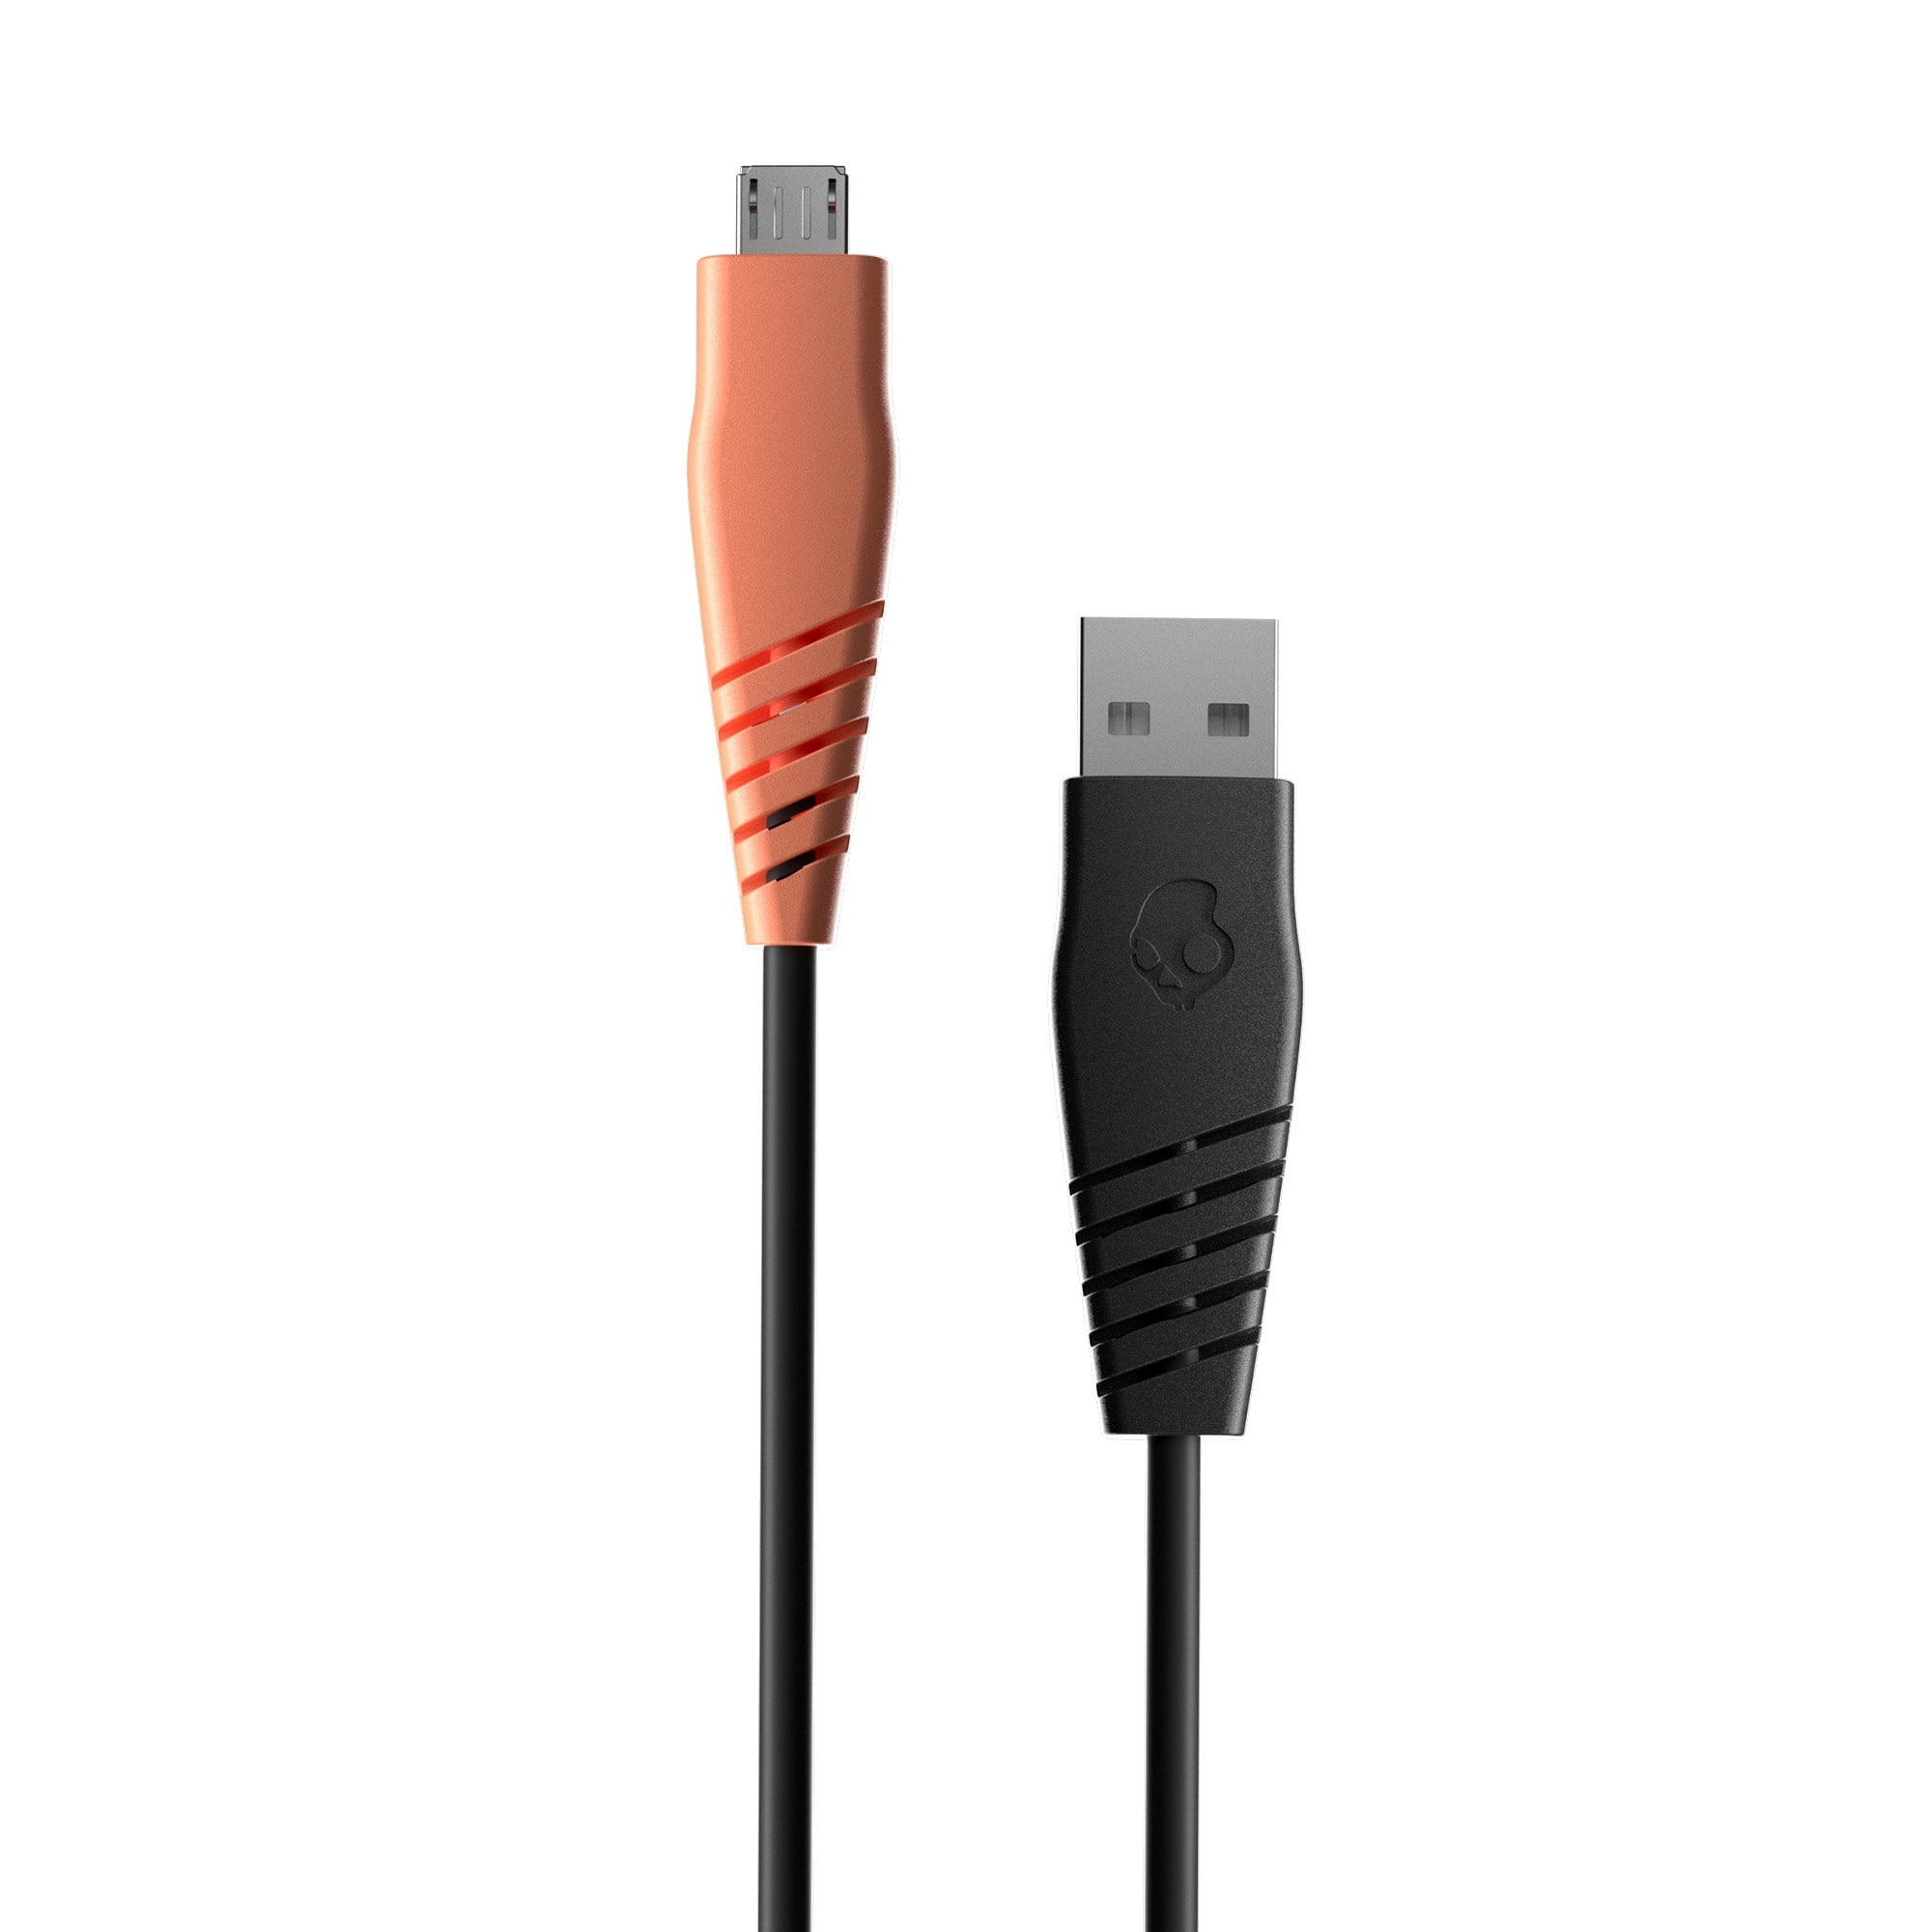 USB cable for Skullcandy Jib 